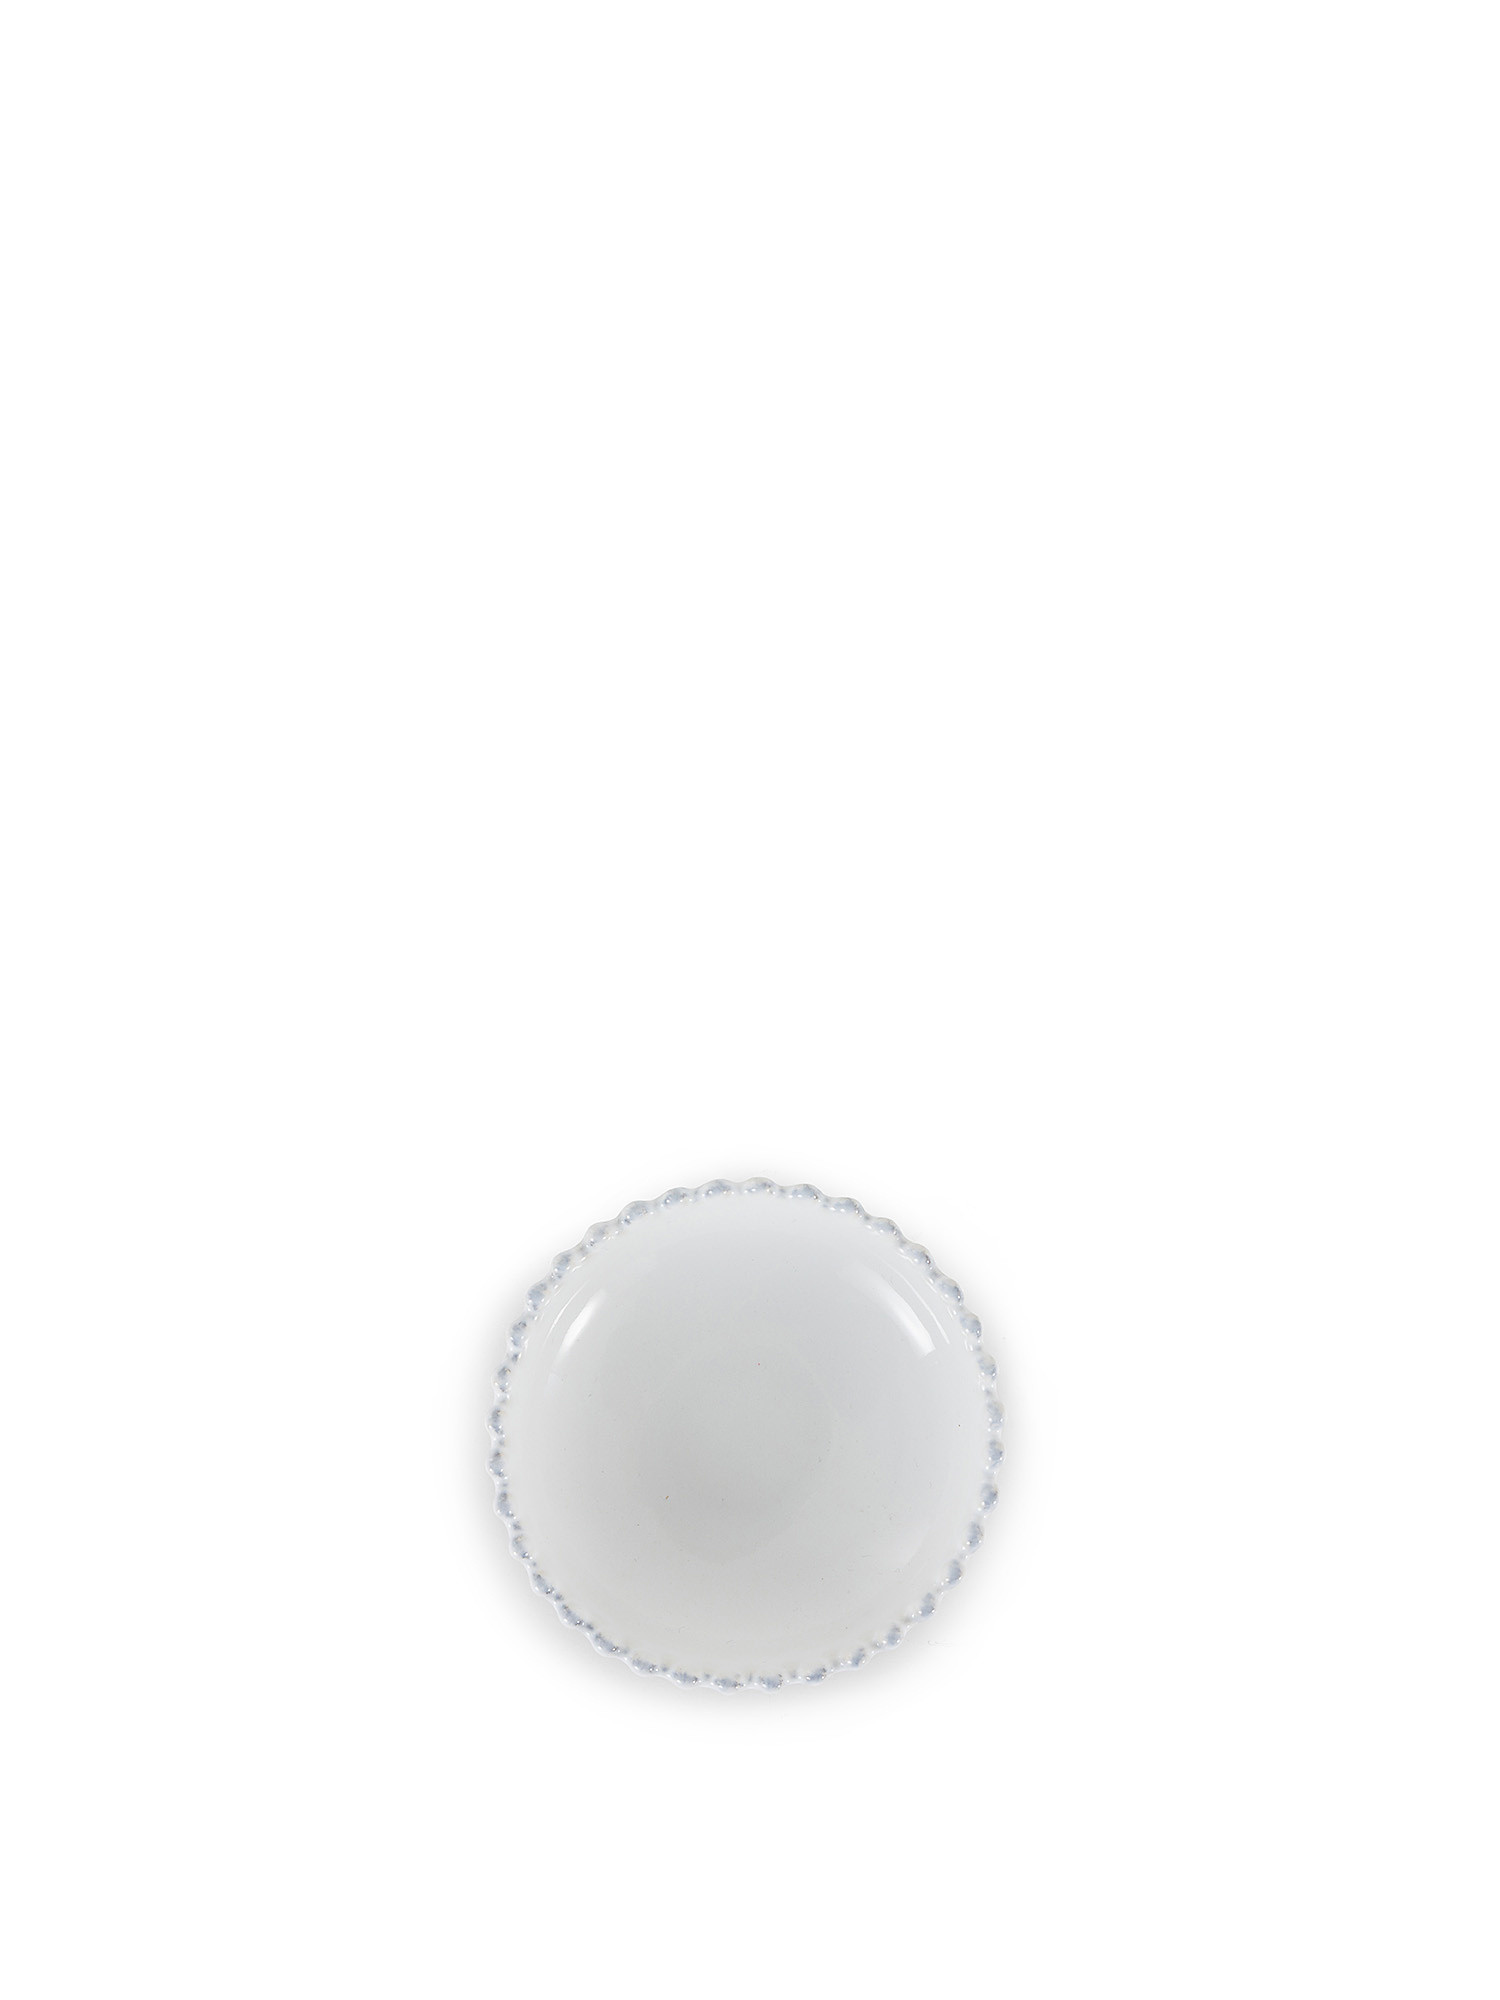 Coppetta ceramica Pearl, Bianco, large image number 1